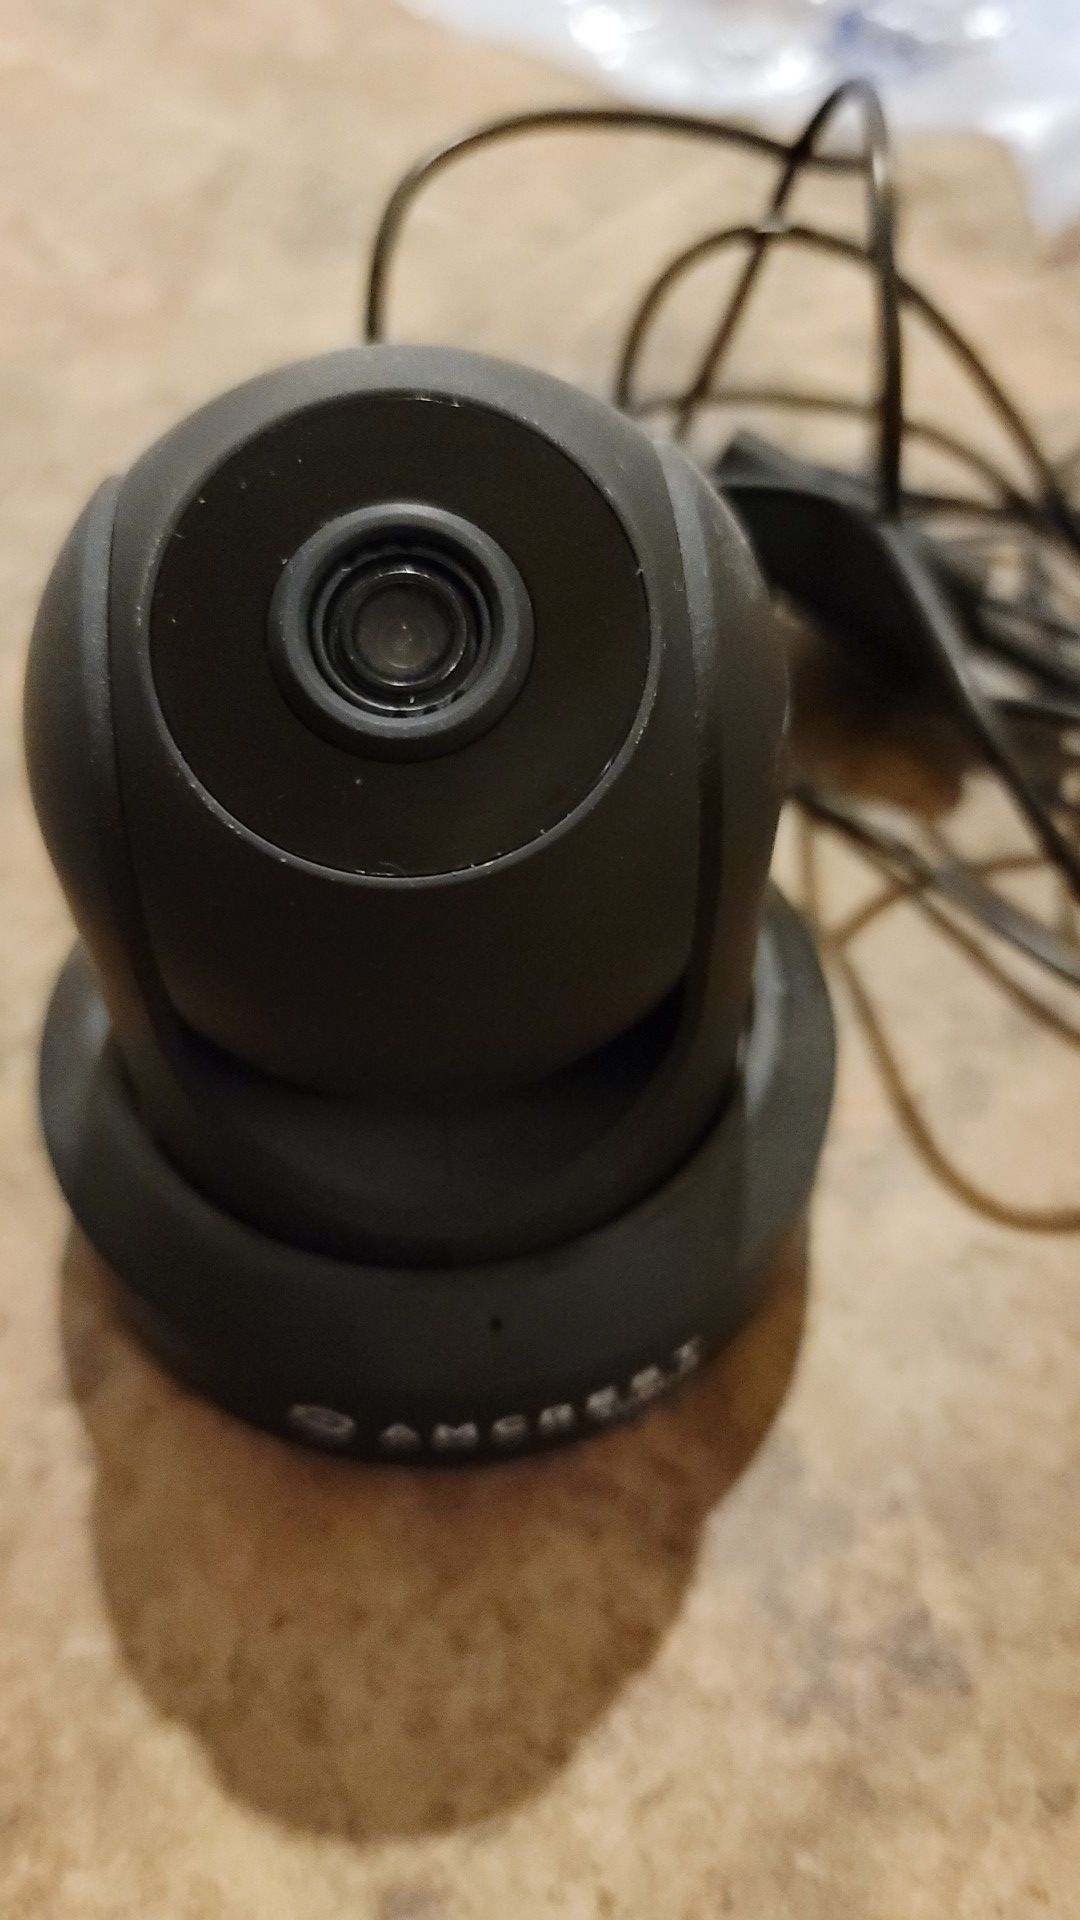 Amcrest wifi security camera- very good